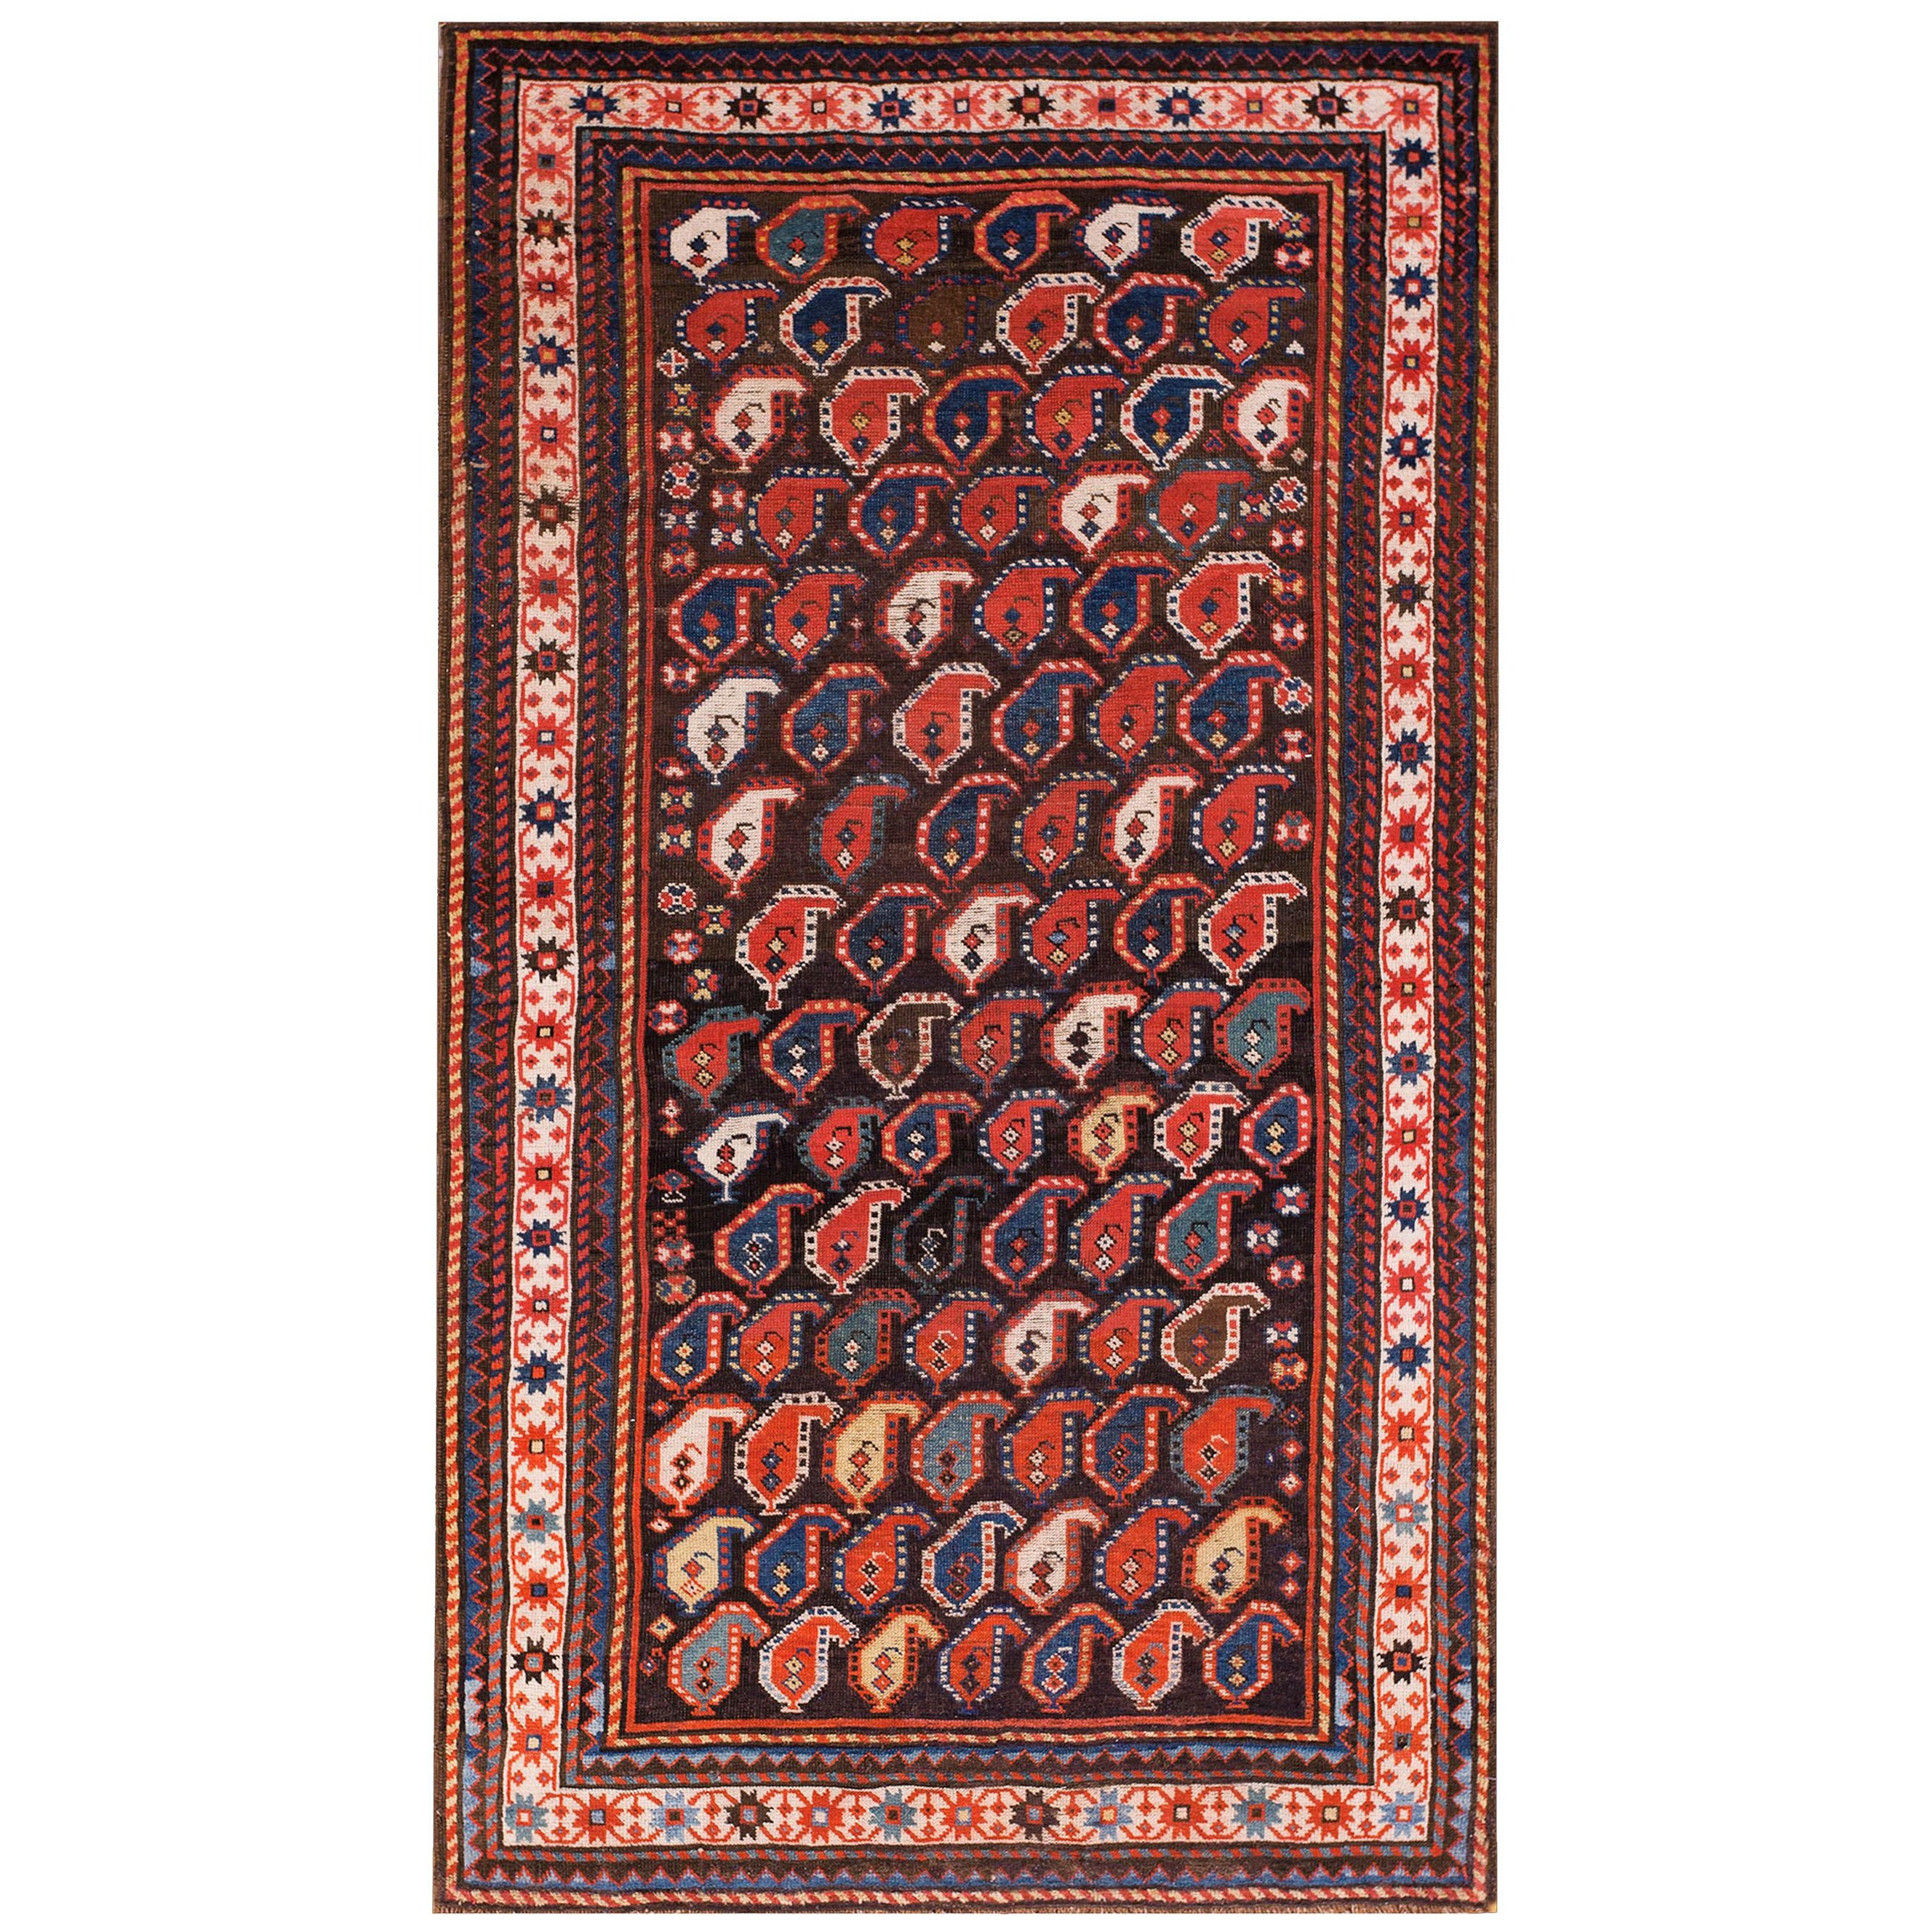 Late 19th Century Caucasian Karabagh Paisley Carpet ( 3'10" x 6'9" - 117 x 206 ) For Sale